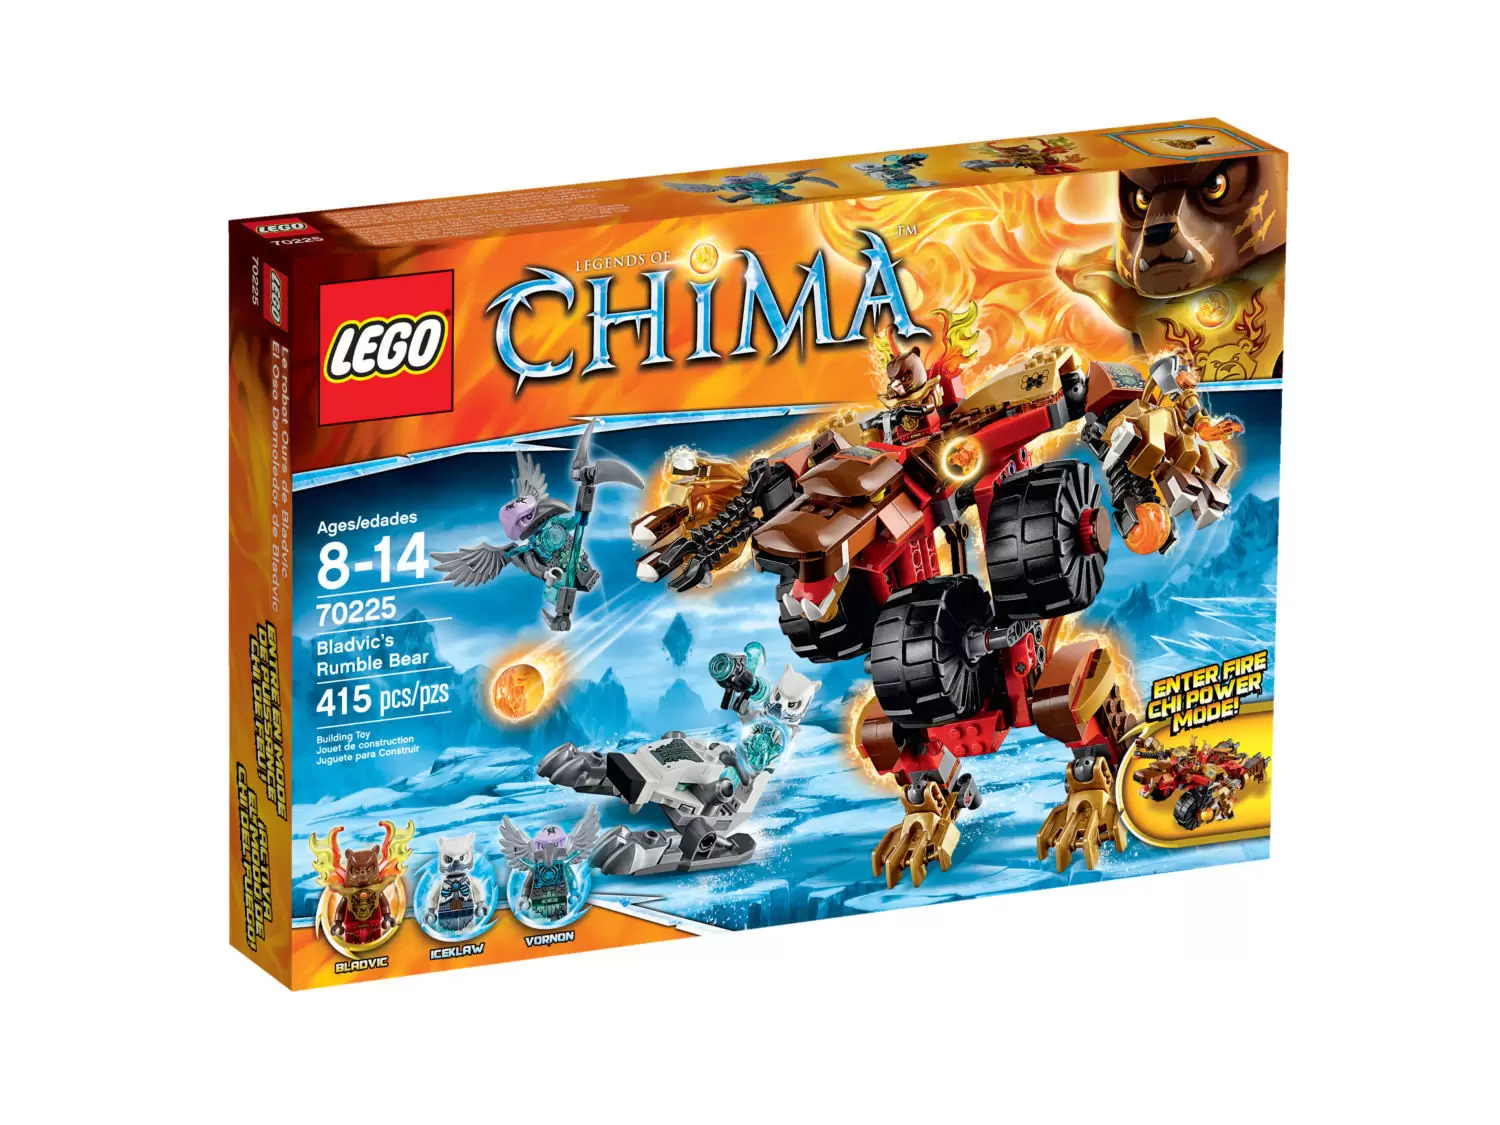 LEGO Legends of Chima - Bladvic\'s Rumble Bear